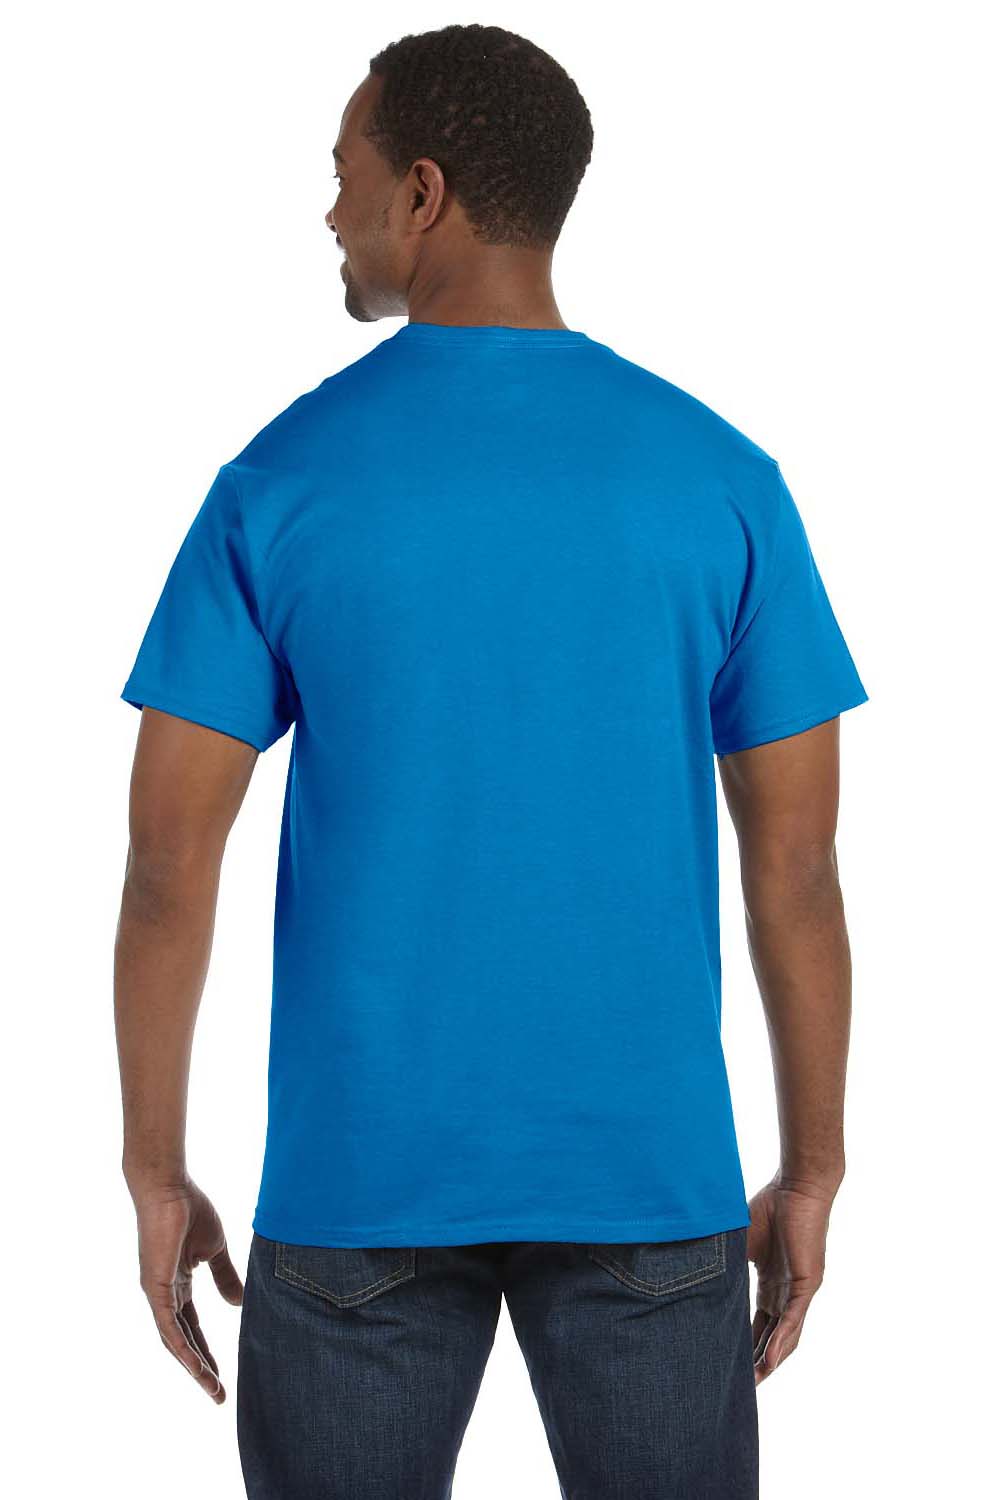 Hanes 5250T Mens ComfortSoft Short Sleeve Crewneck T-Shirt Sapphire Blue Back